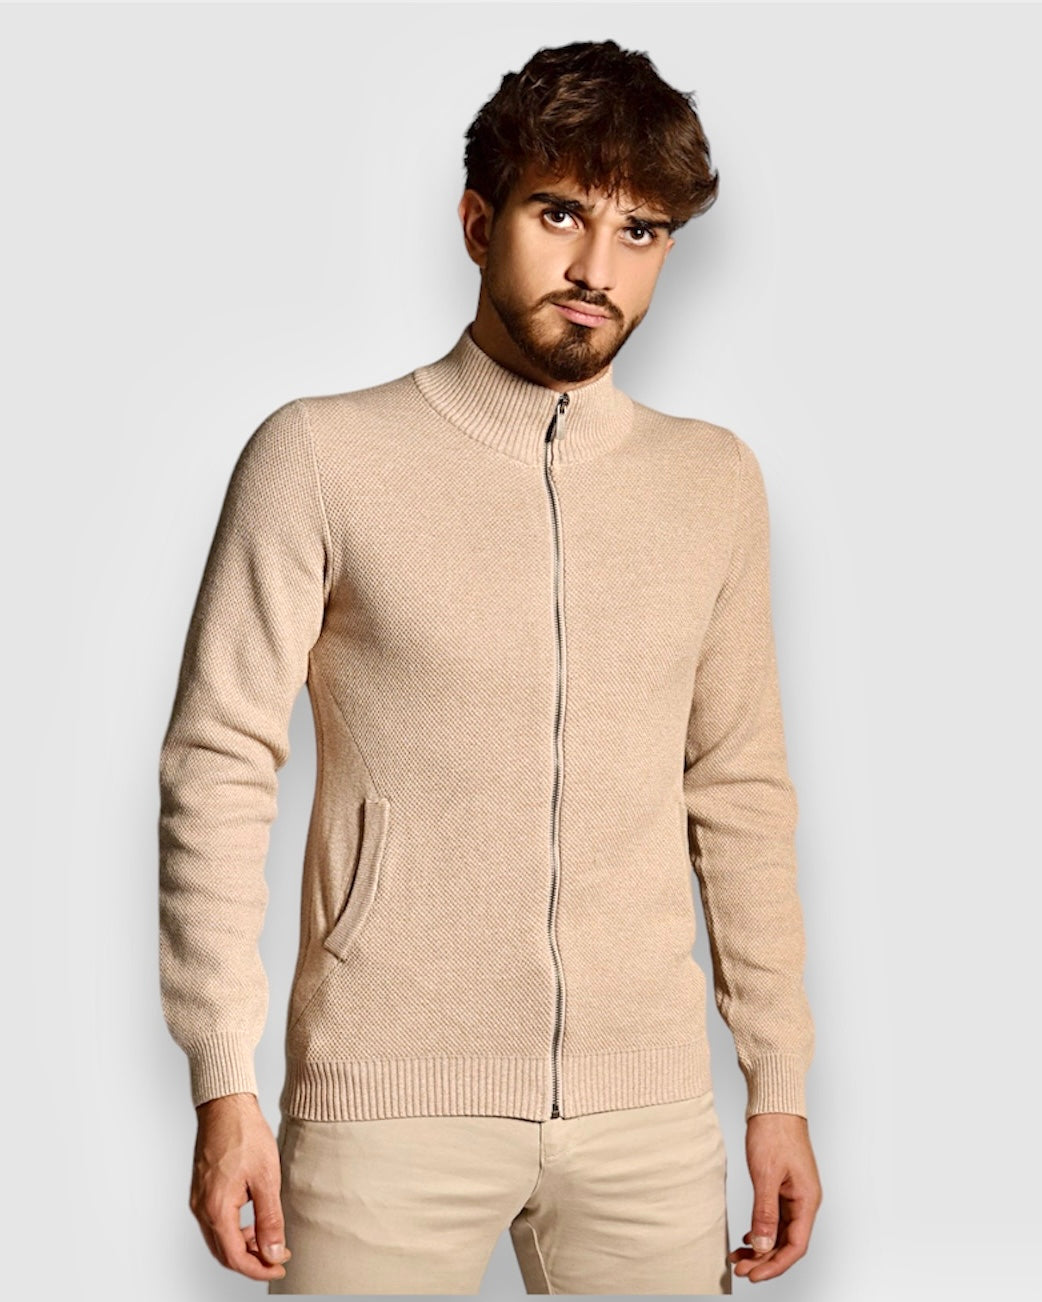 2H #46035 Beige Cardigan Pure Cotton Sweater